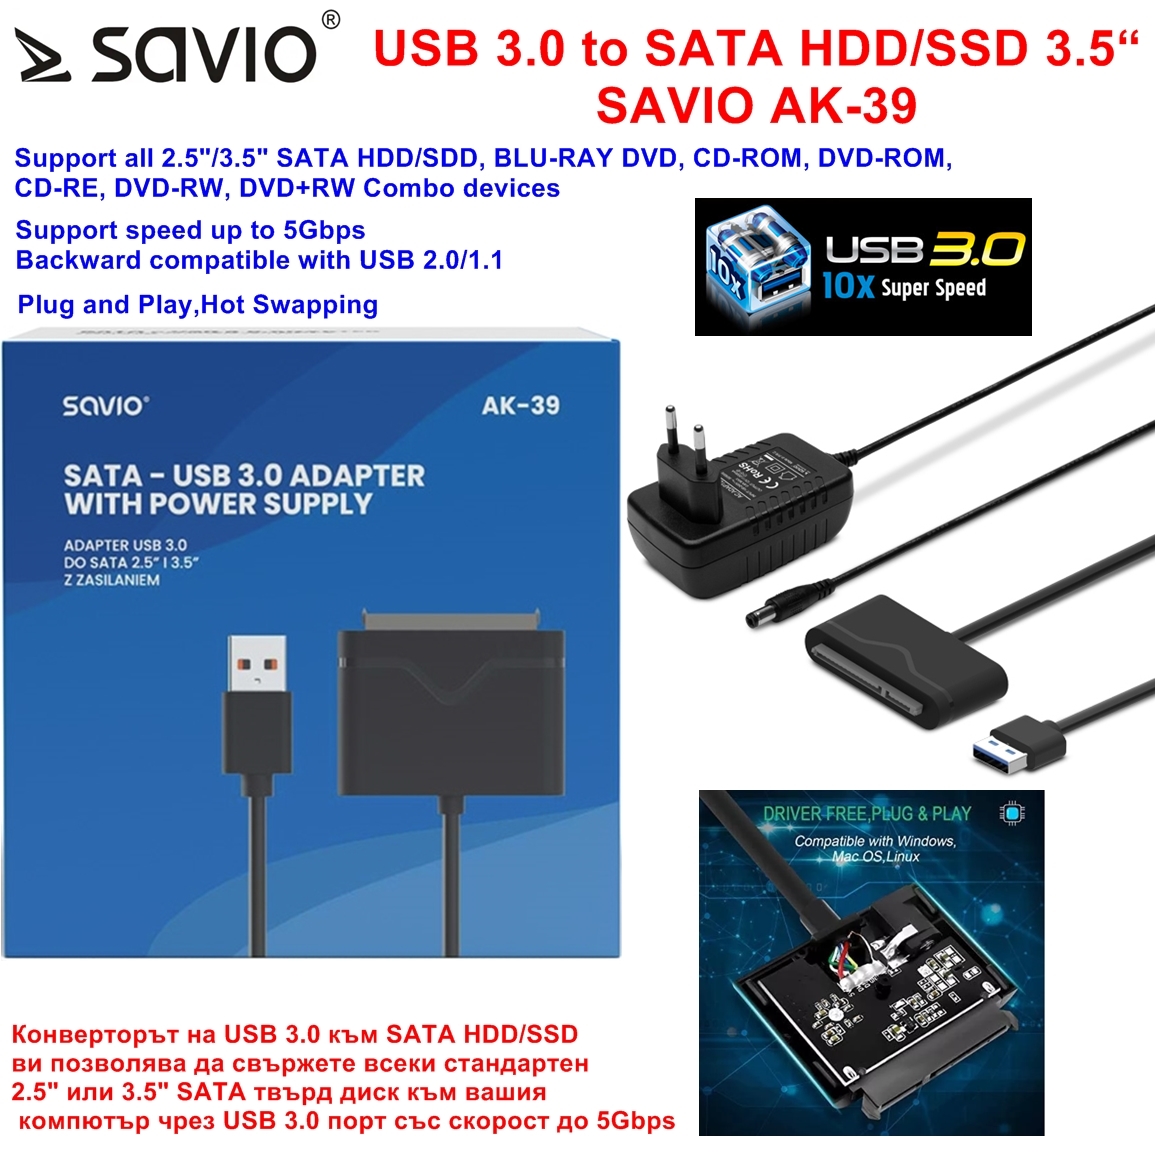 USB 3.0 to SATA HDD/SSD 3.5“ SAVIO AK-39